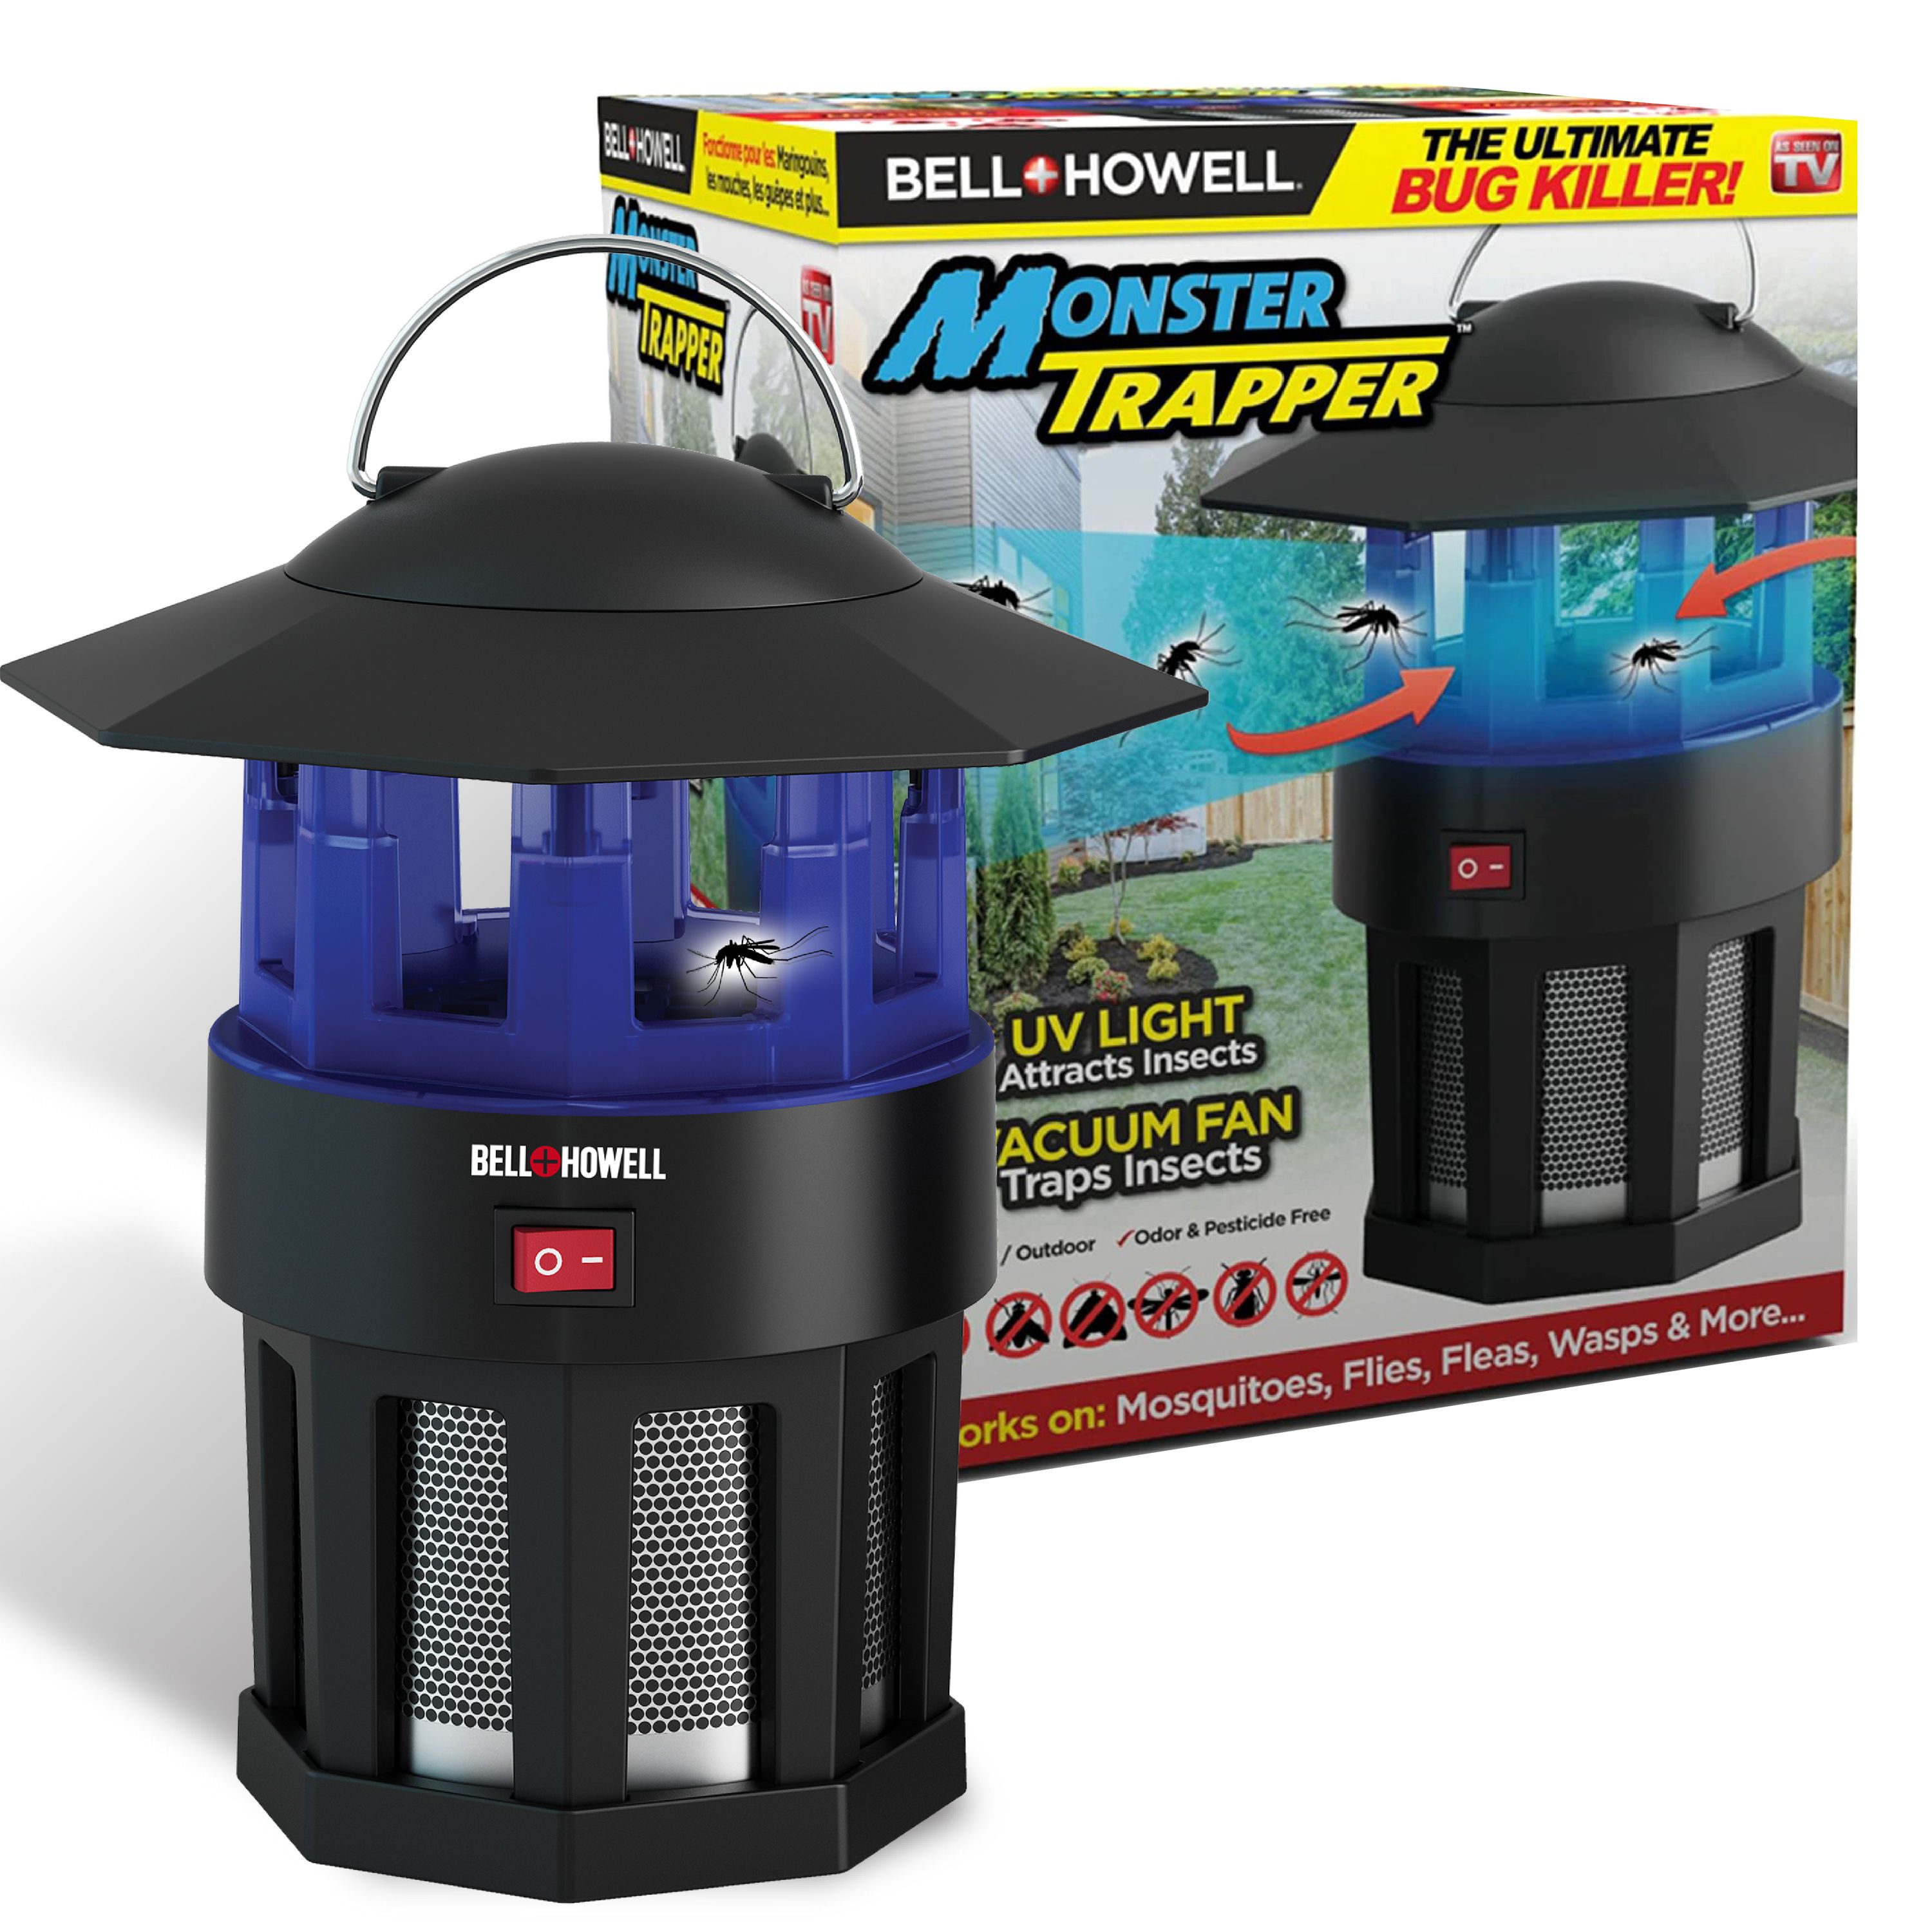 BELL + HOWELL Bell + Howell monster zapper Indoor/Outdoor Insect